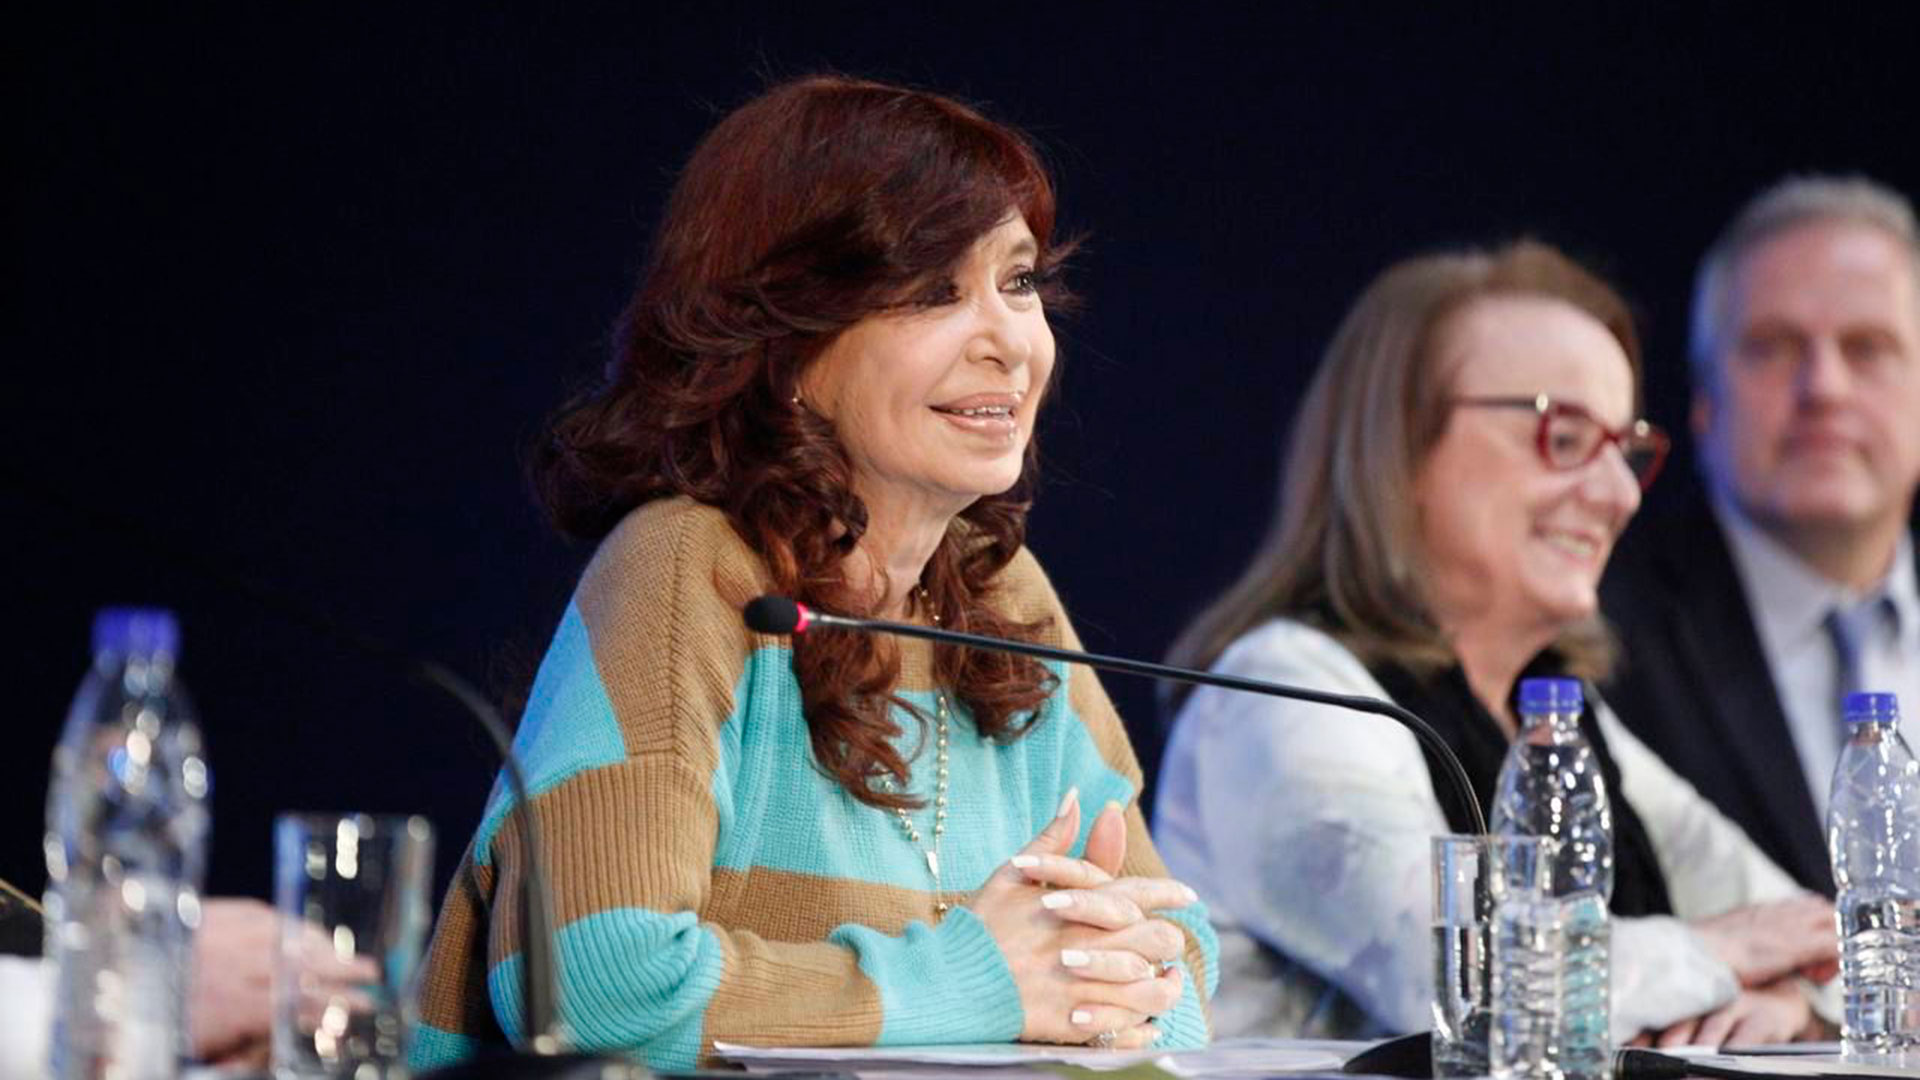 Cristina Kirchner in El Calafate